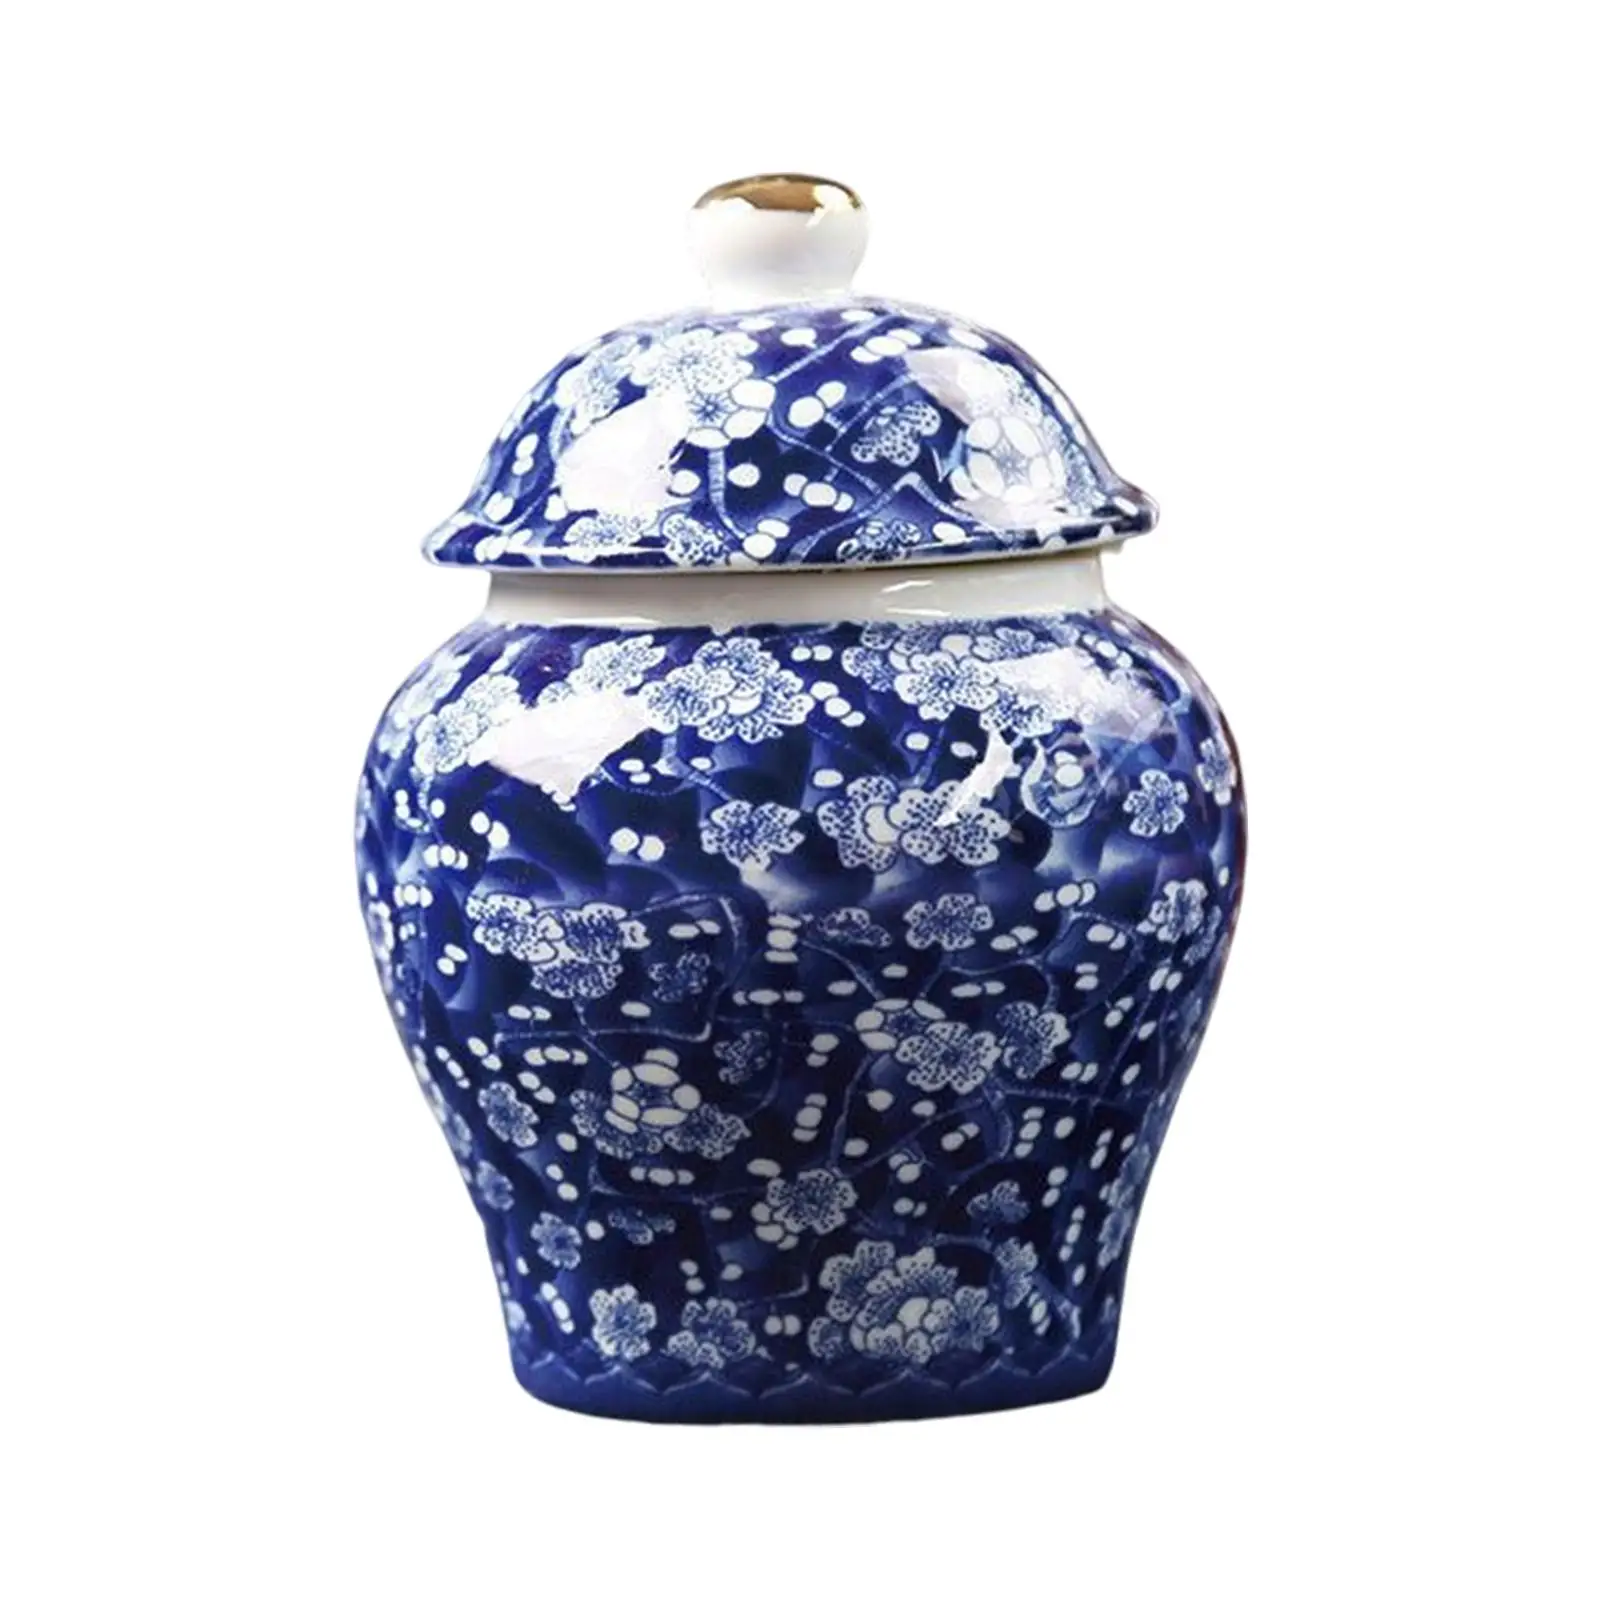 Ceramic Ginger Jar Oriental Style Household Decorative Ceramic Flower Vase Centerpiece Home Decor Accent Traditional Beautiful